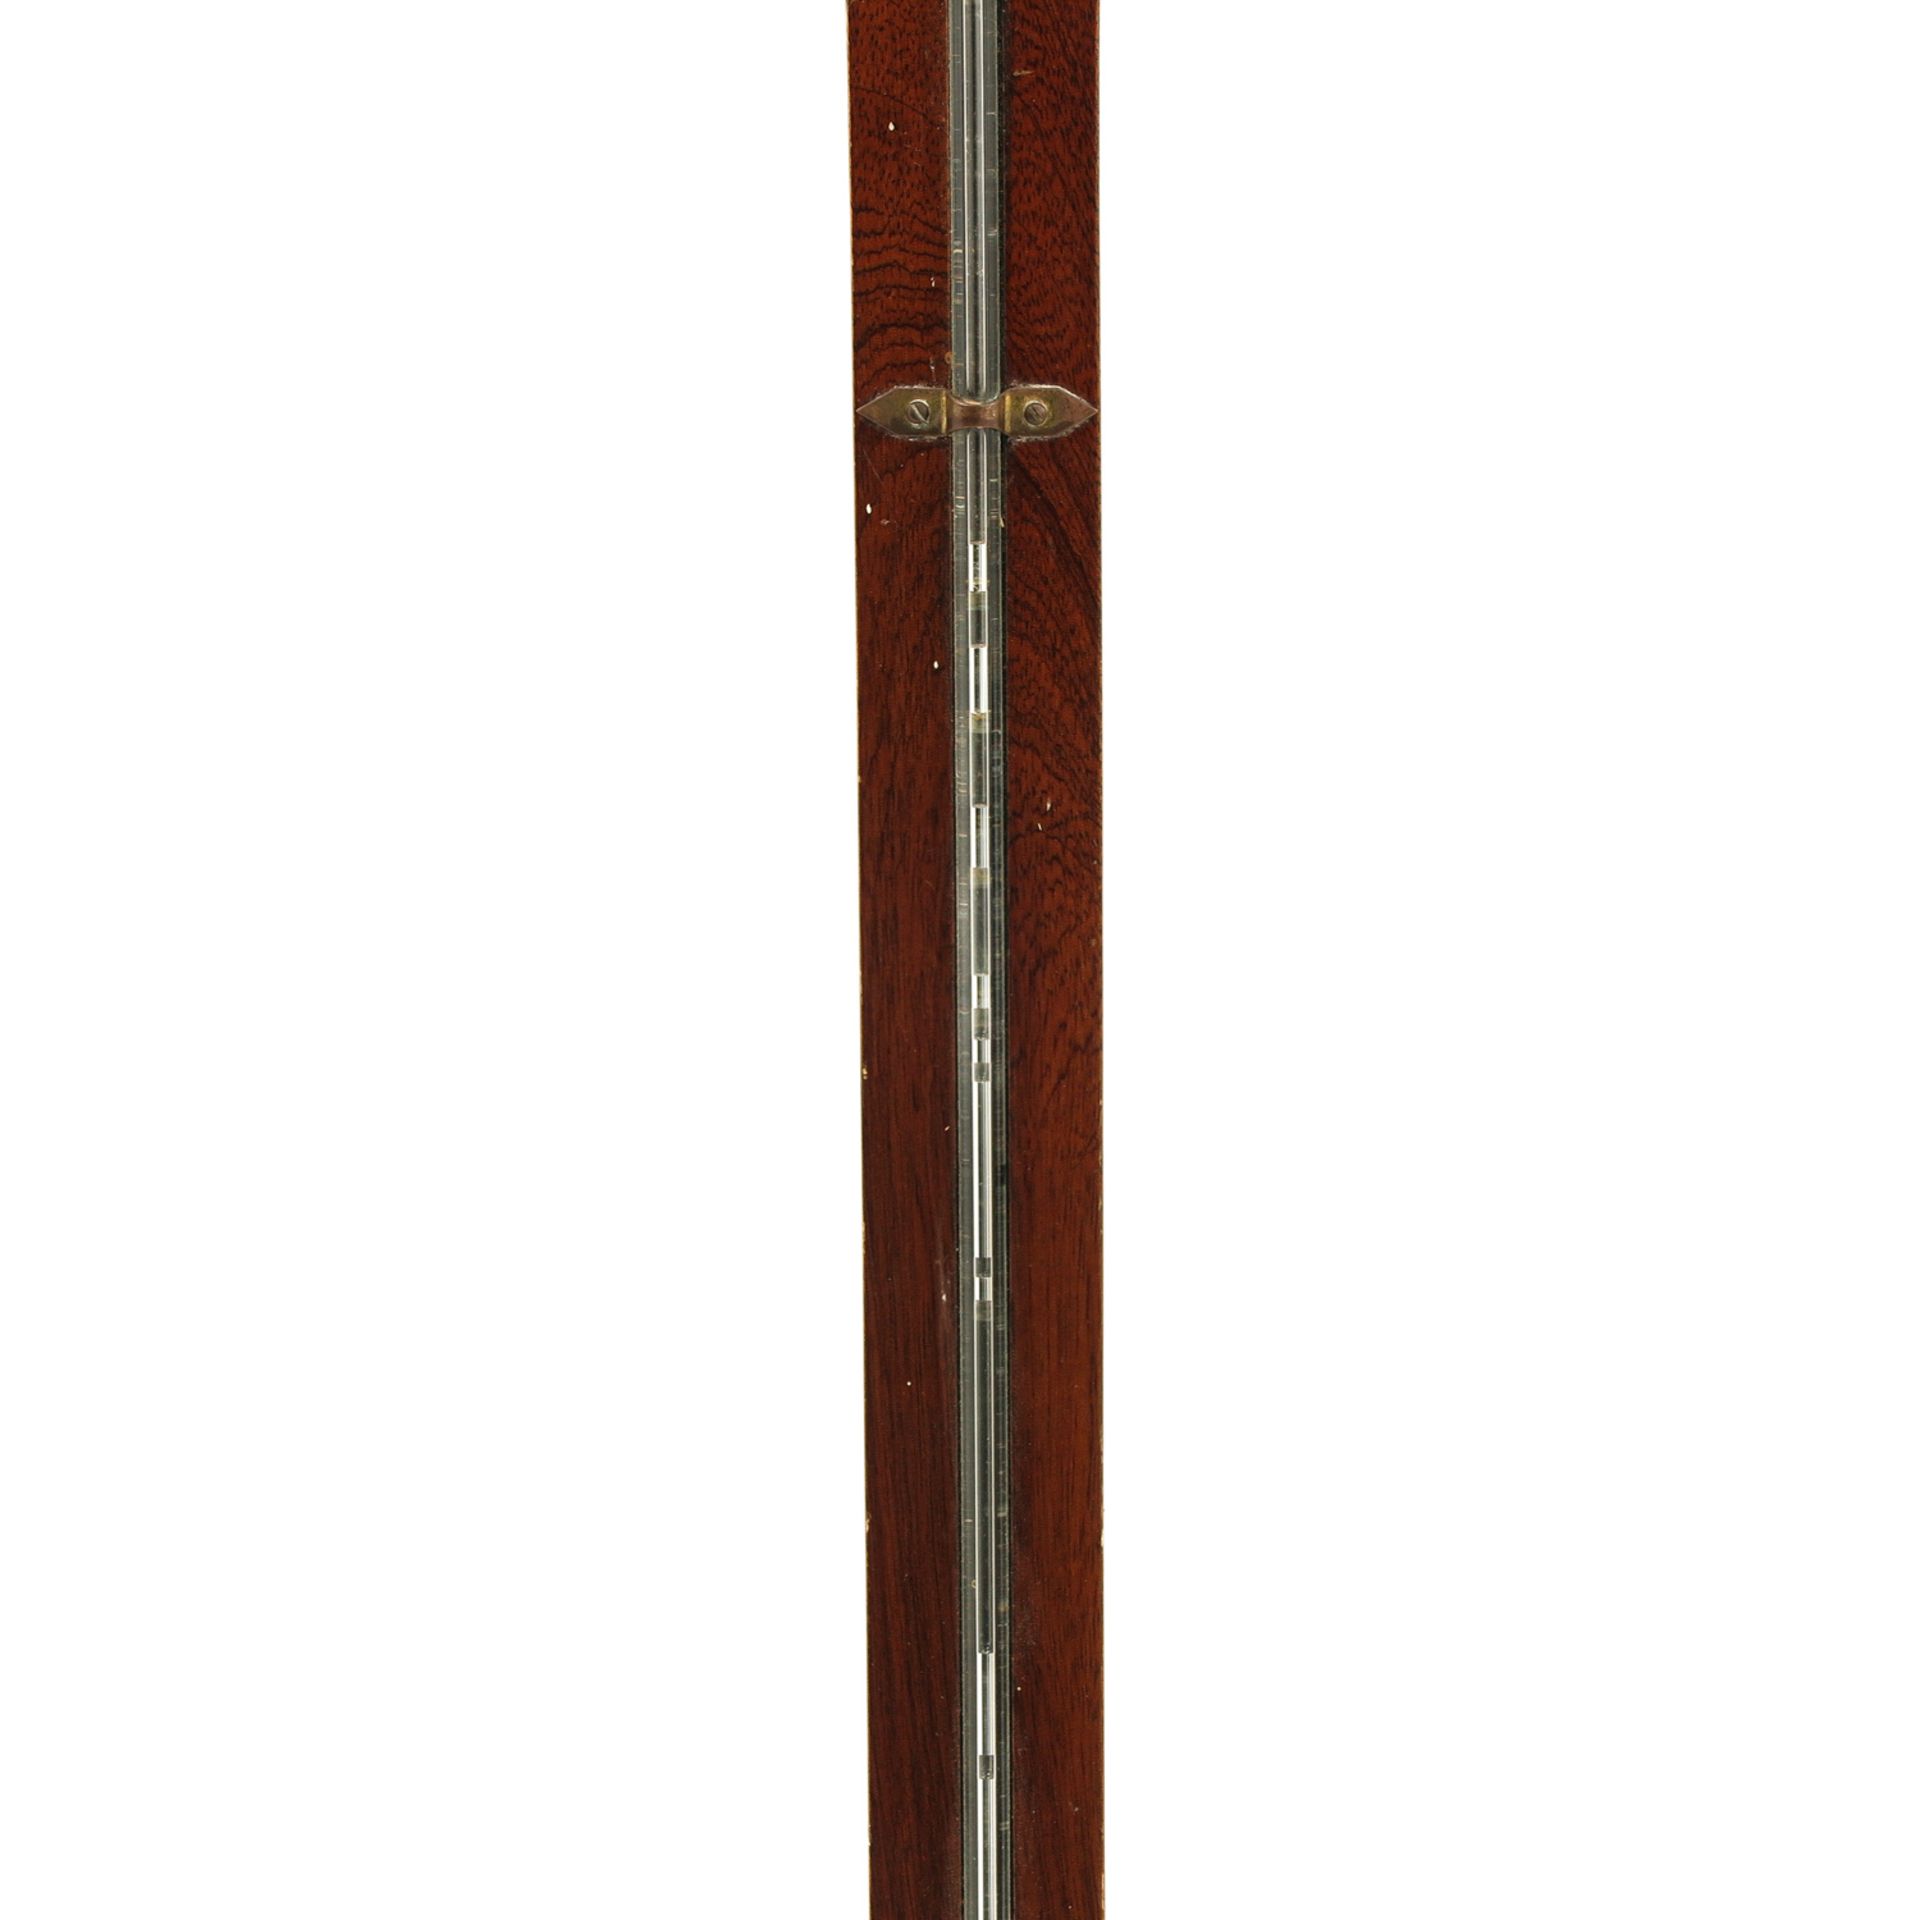 A Wood Barometer - Image 4 of 5